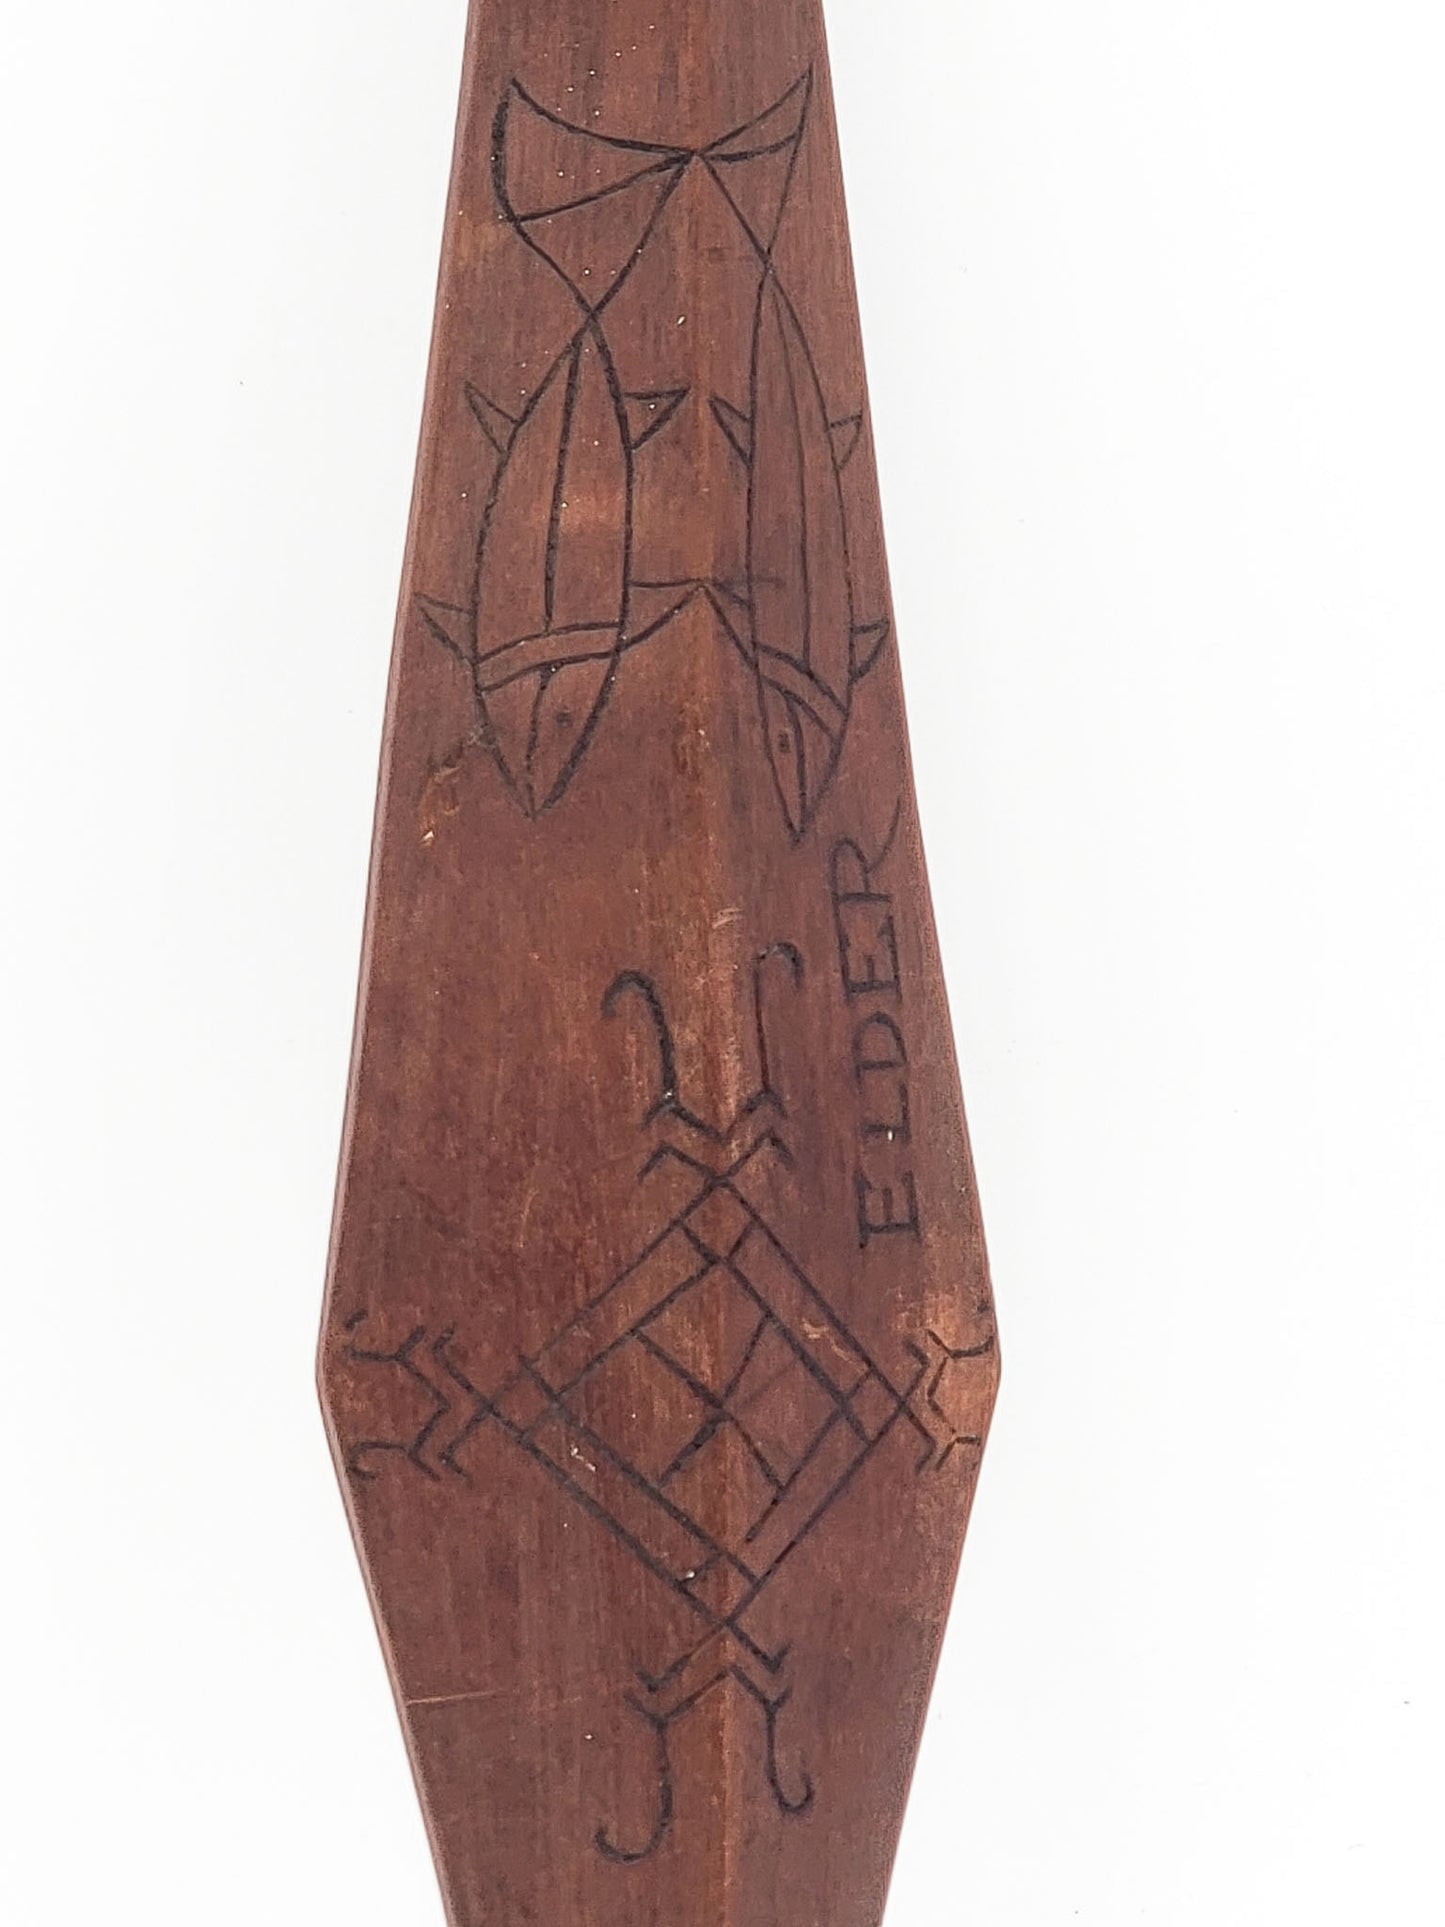 Malaita, Solomon Islands Supe or Subi Hand Carved